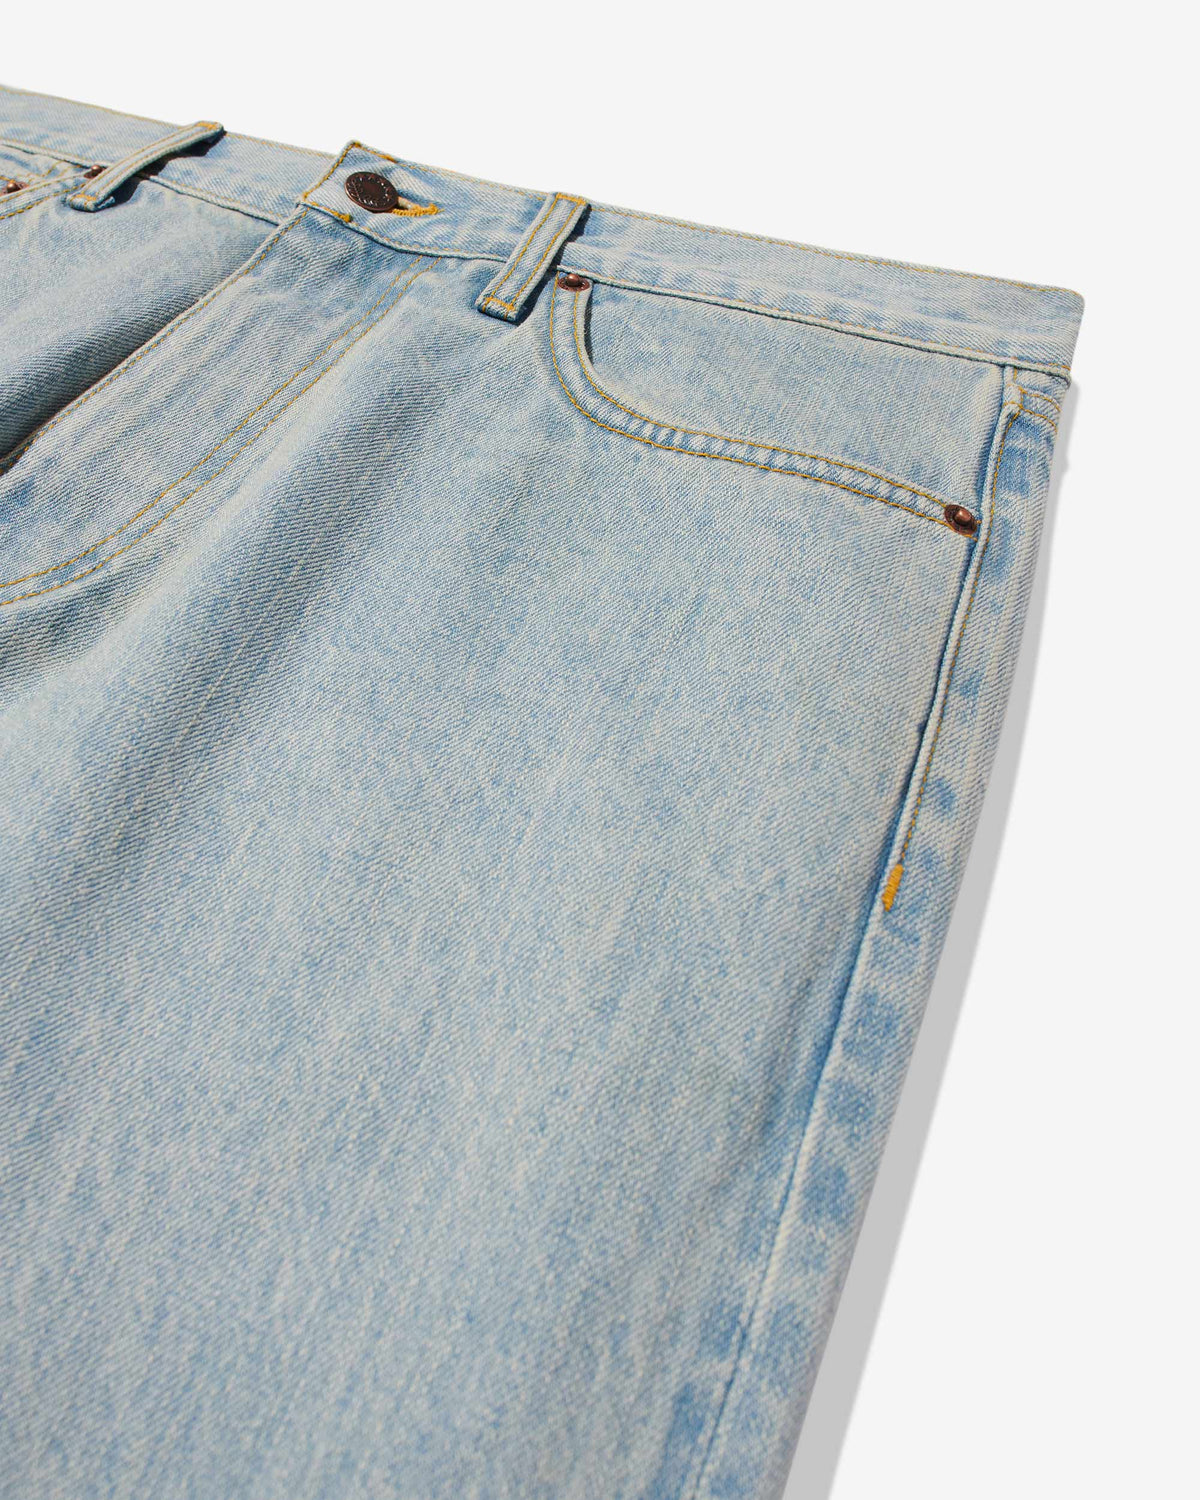 5-Pocket Denim Jeans Noah 